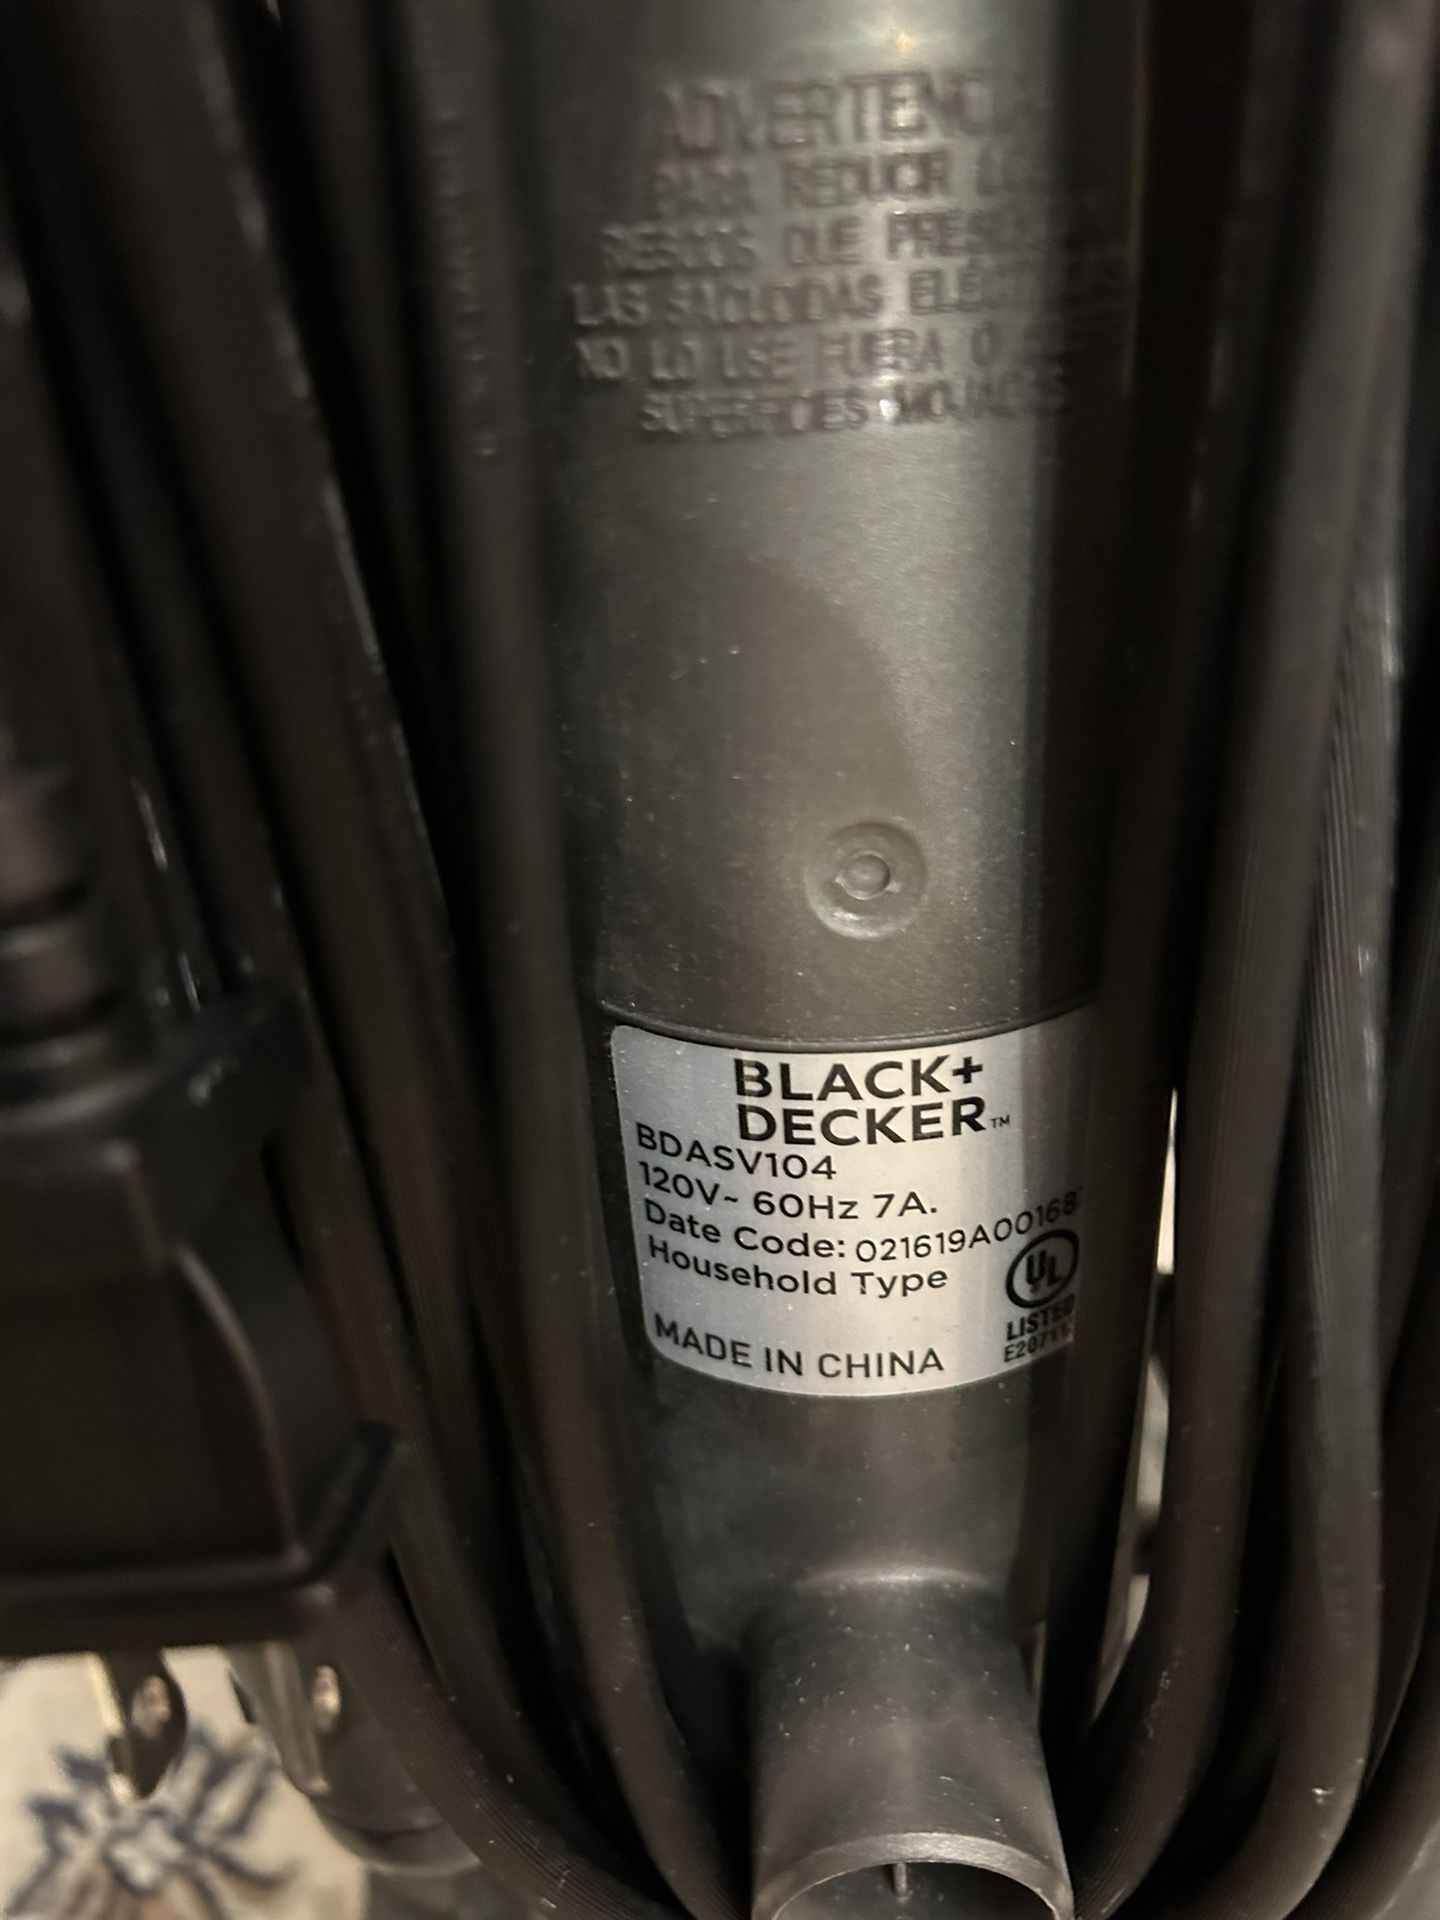 Black and Decker Airswivel Versatile Upright Vacuum Deals, Coupons